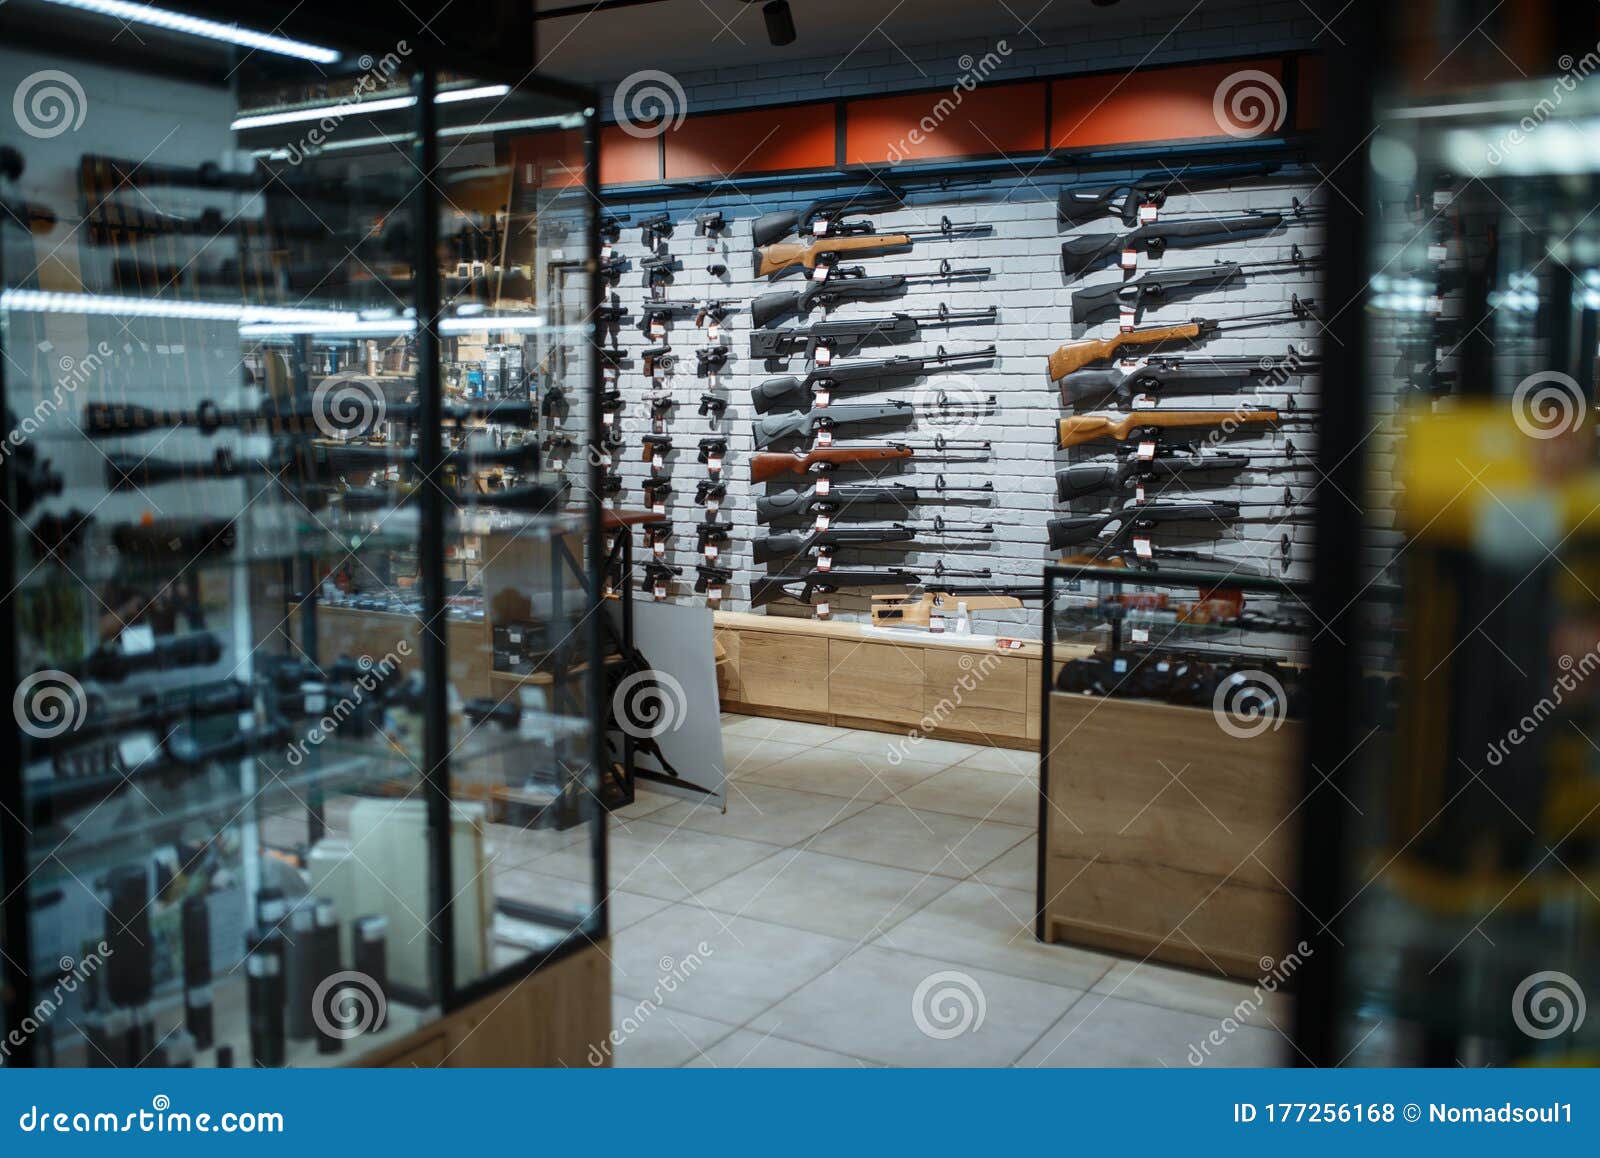 rifle choice, showcase in gun shop, nobody